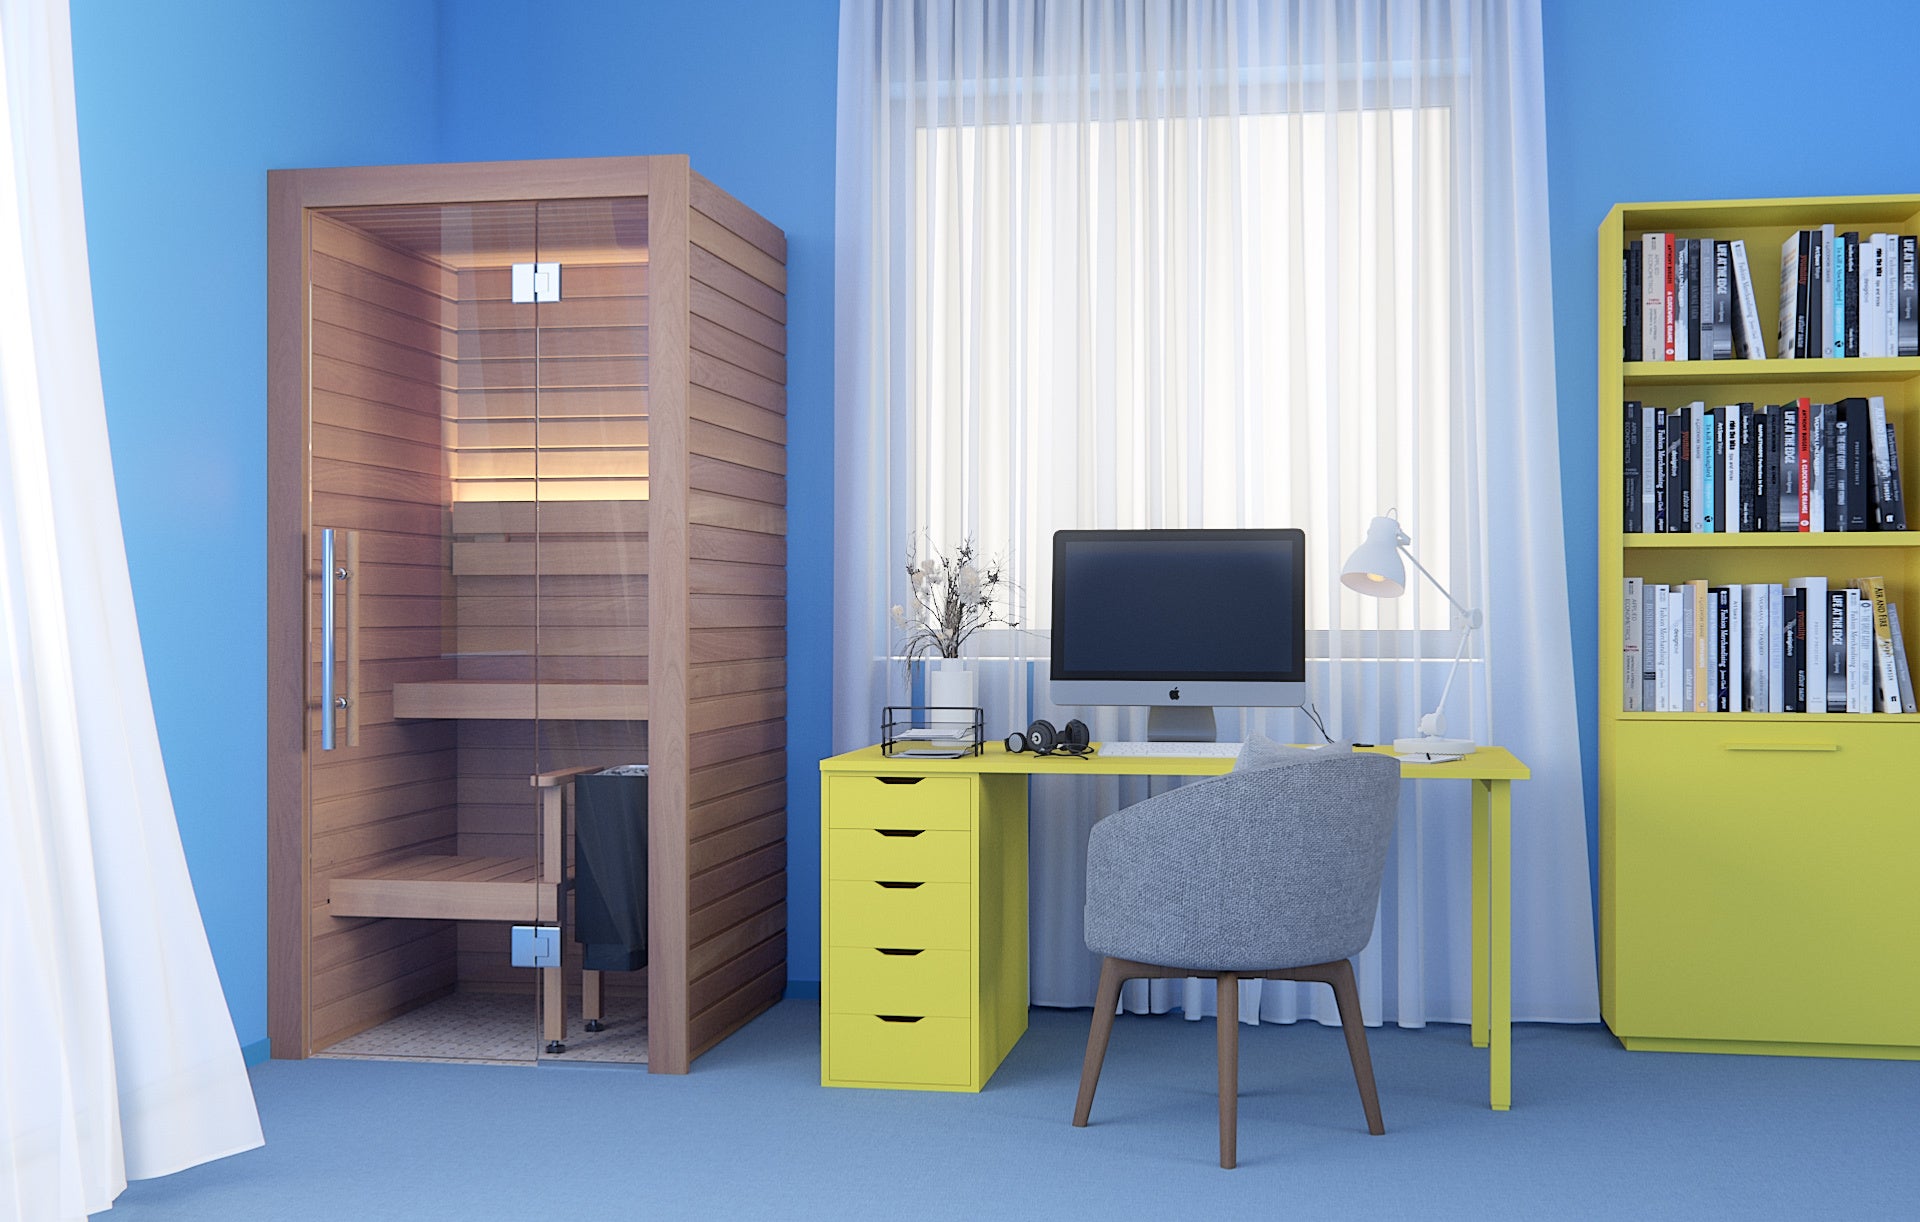 【totonoü】“家具のように置けるサウナ” 「Cala Mini」の販売を開始 - 都心のマンション・賃貸向け、家庭用サウナの新製品 -のサブ画像7_家庭用サウナを書斎に設置したイメージ